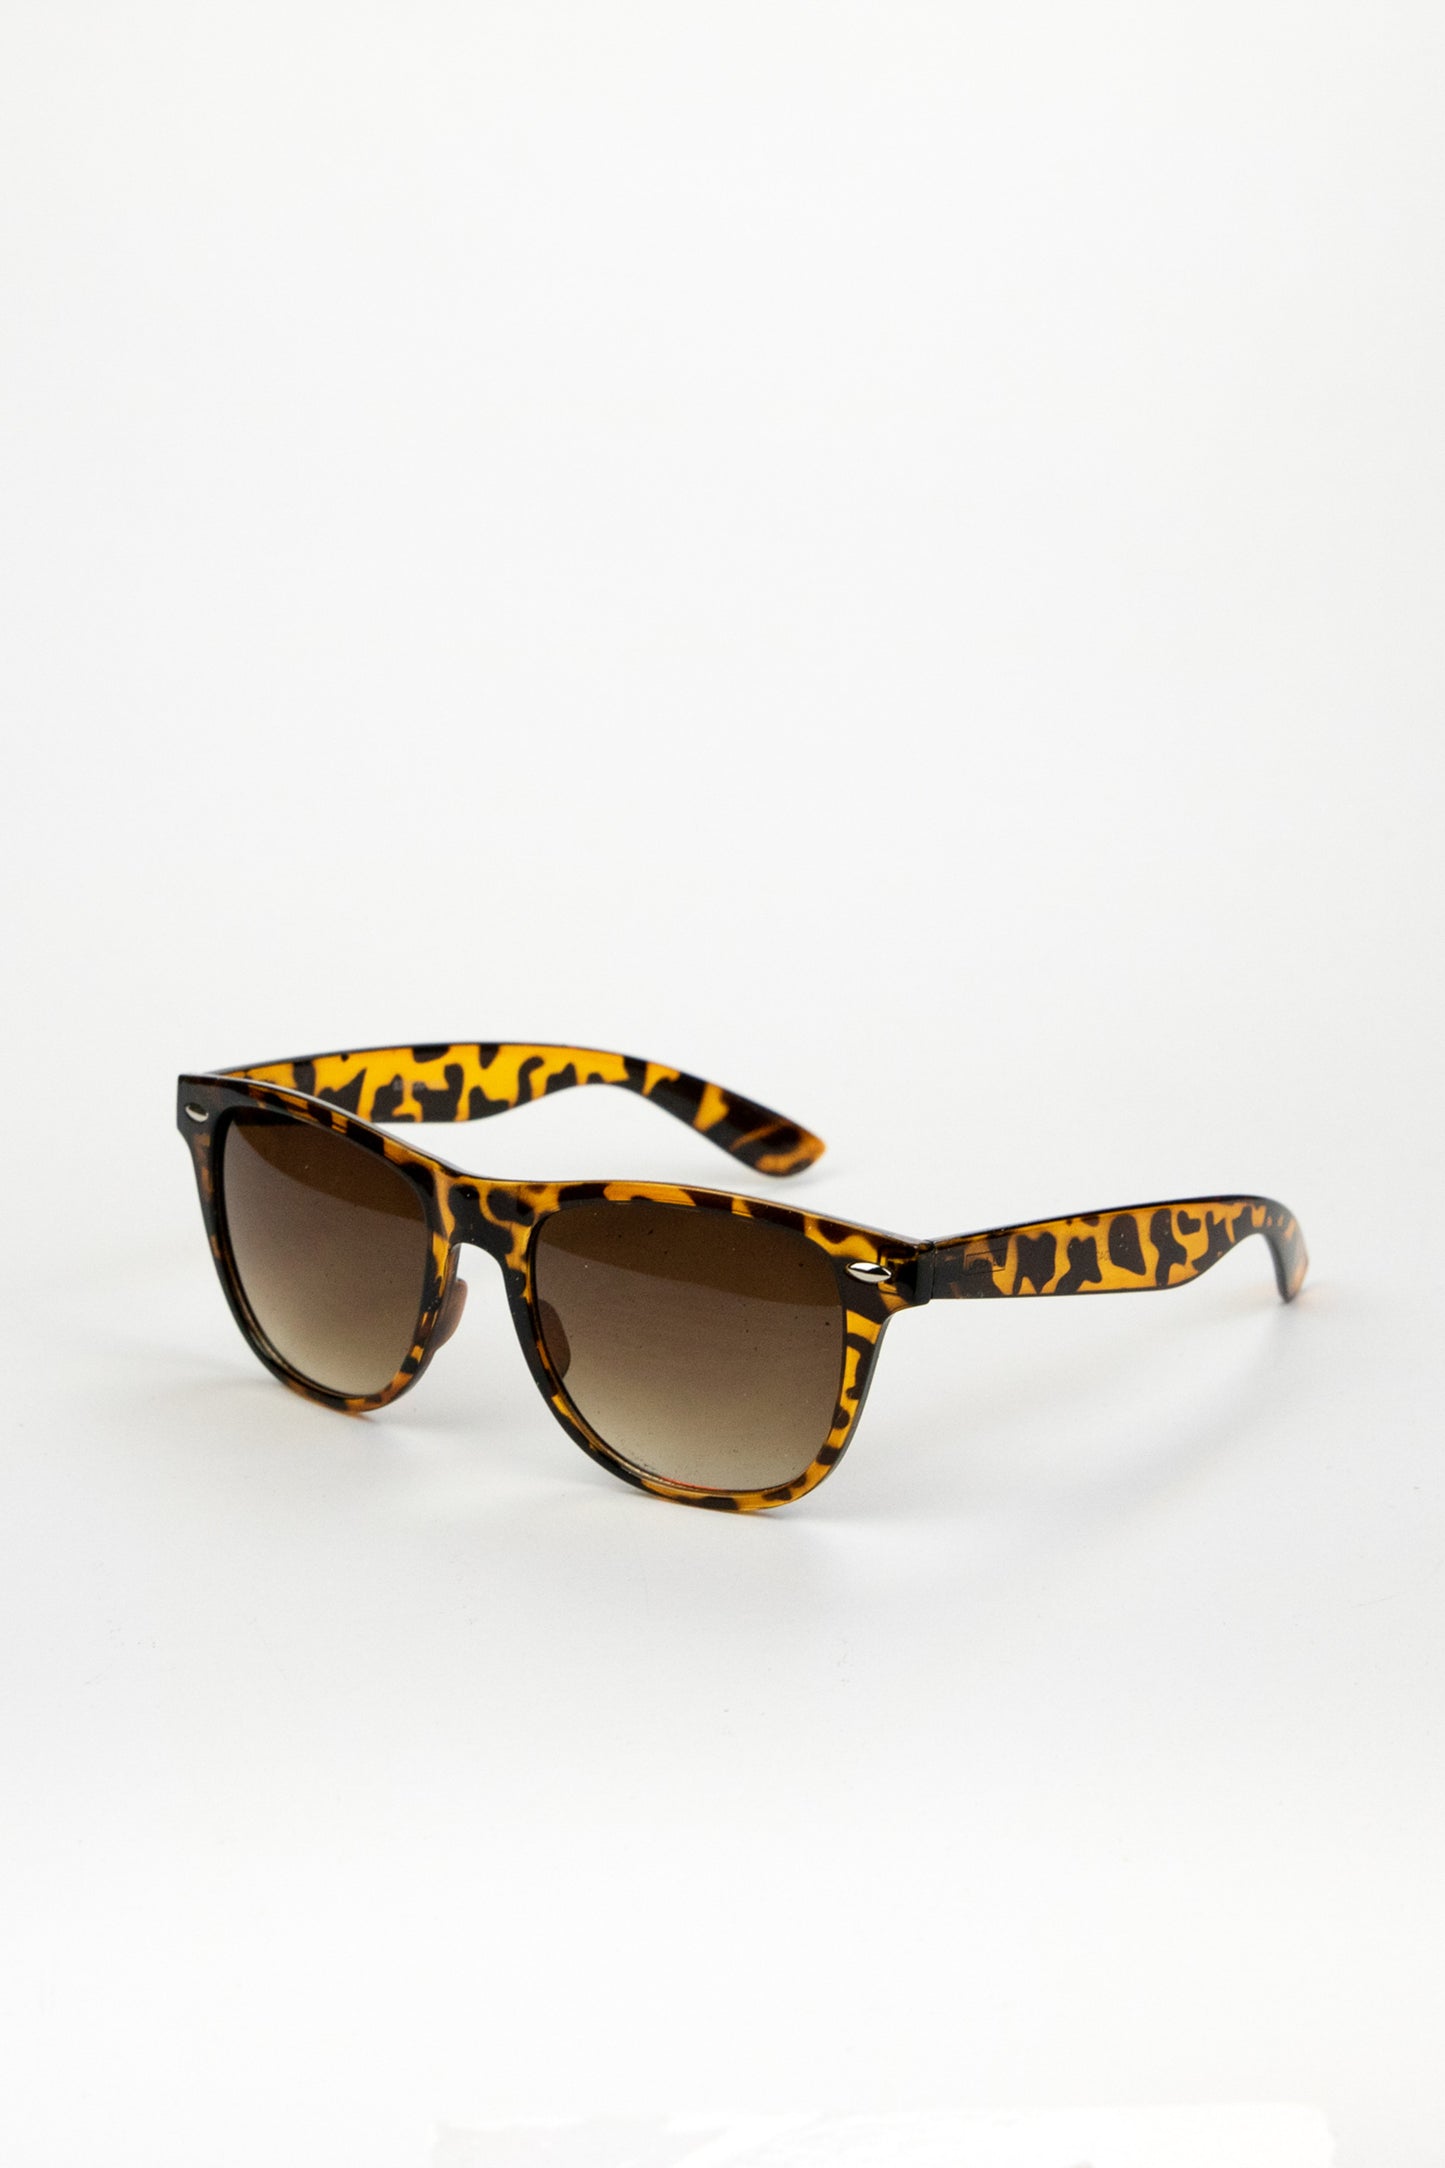 Manhattan Tortoise Sunglasses